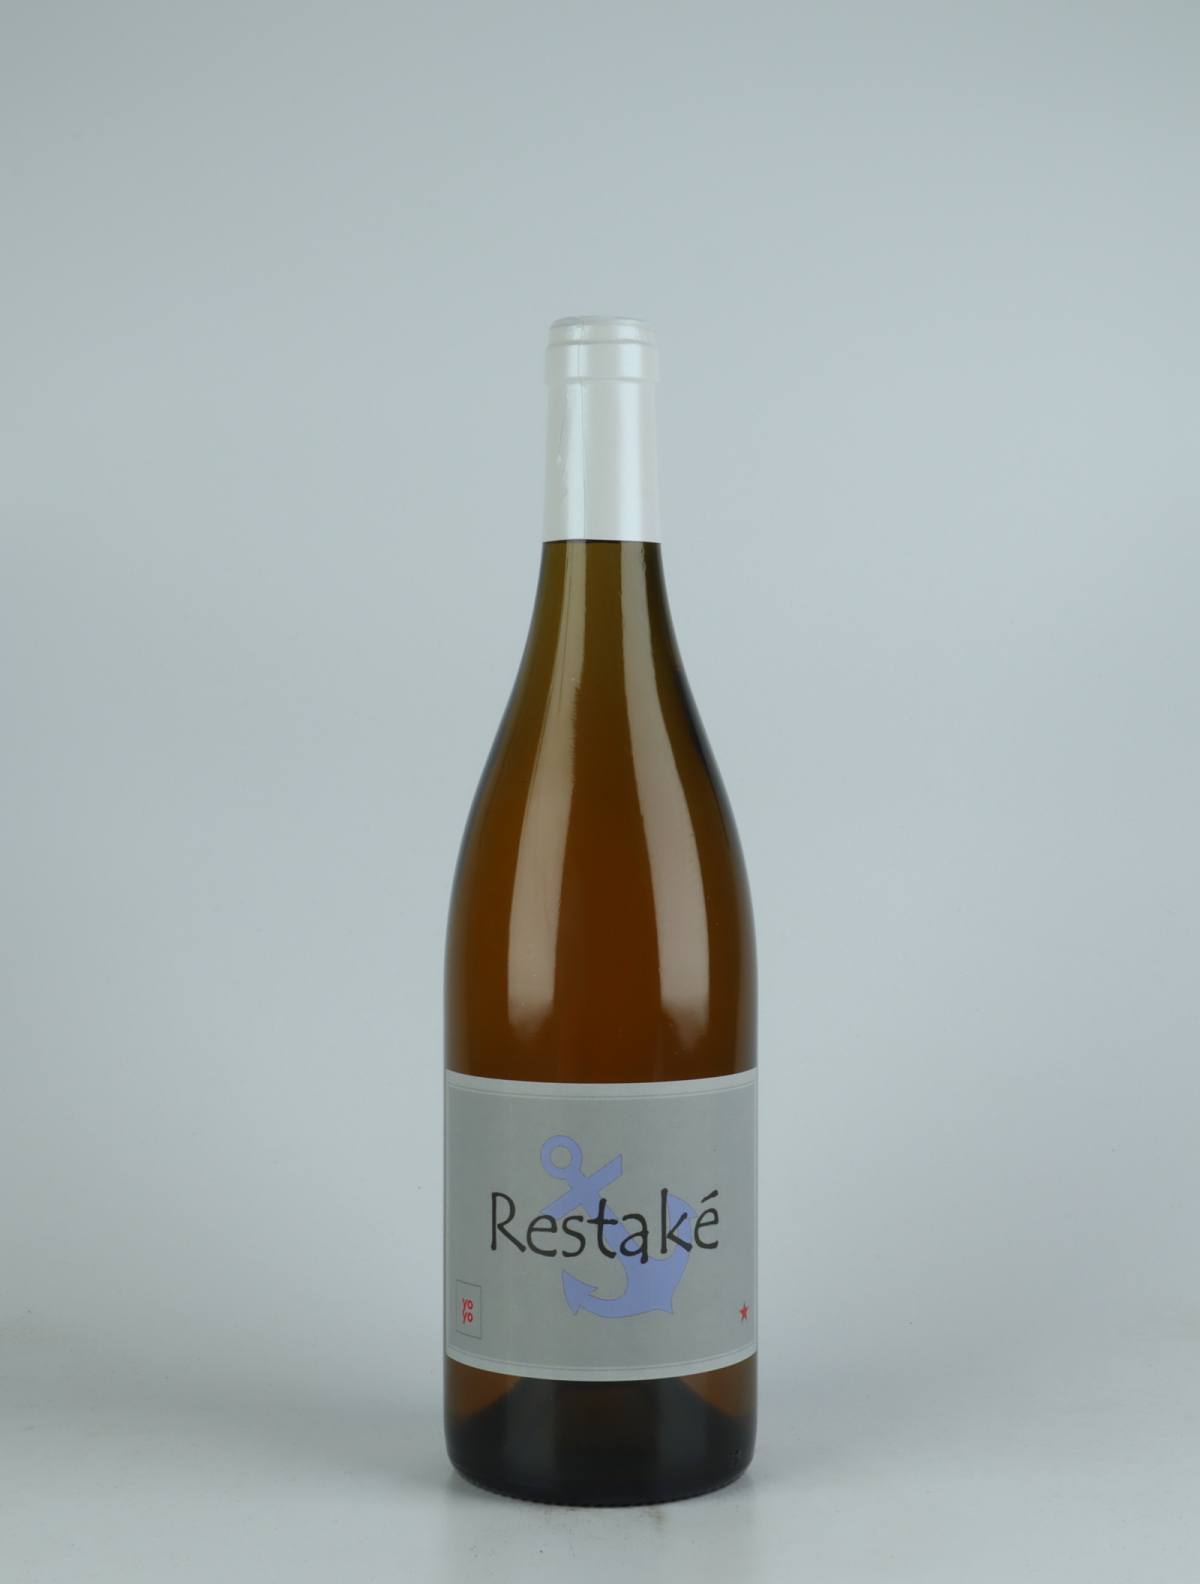 En flaske 2021 Restaké Hvidvin fra Domaine Yoyo, Rousillon i Frankrig